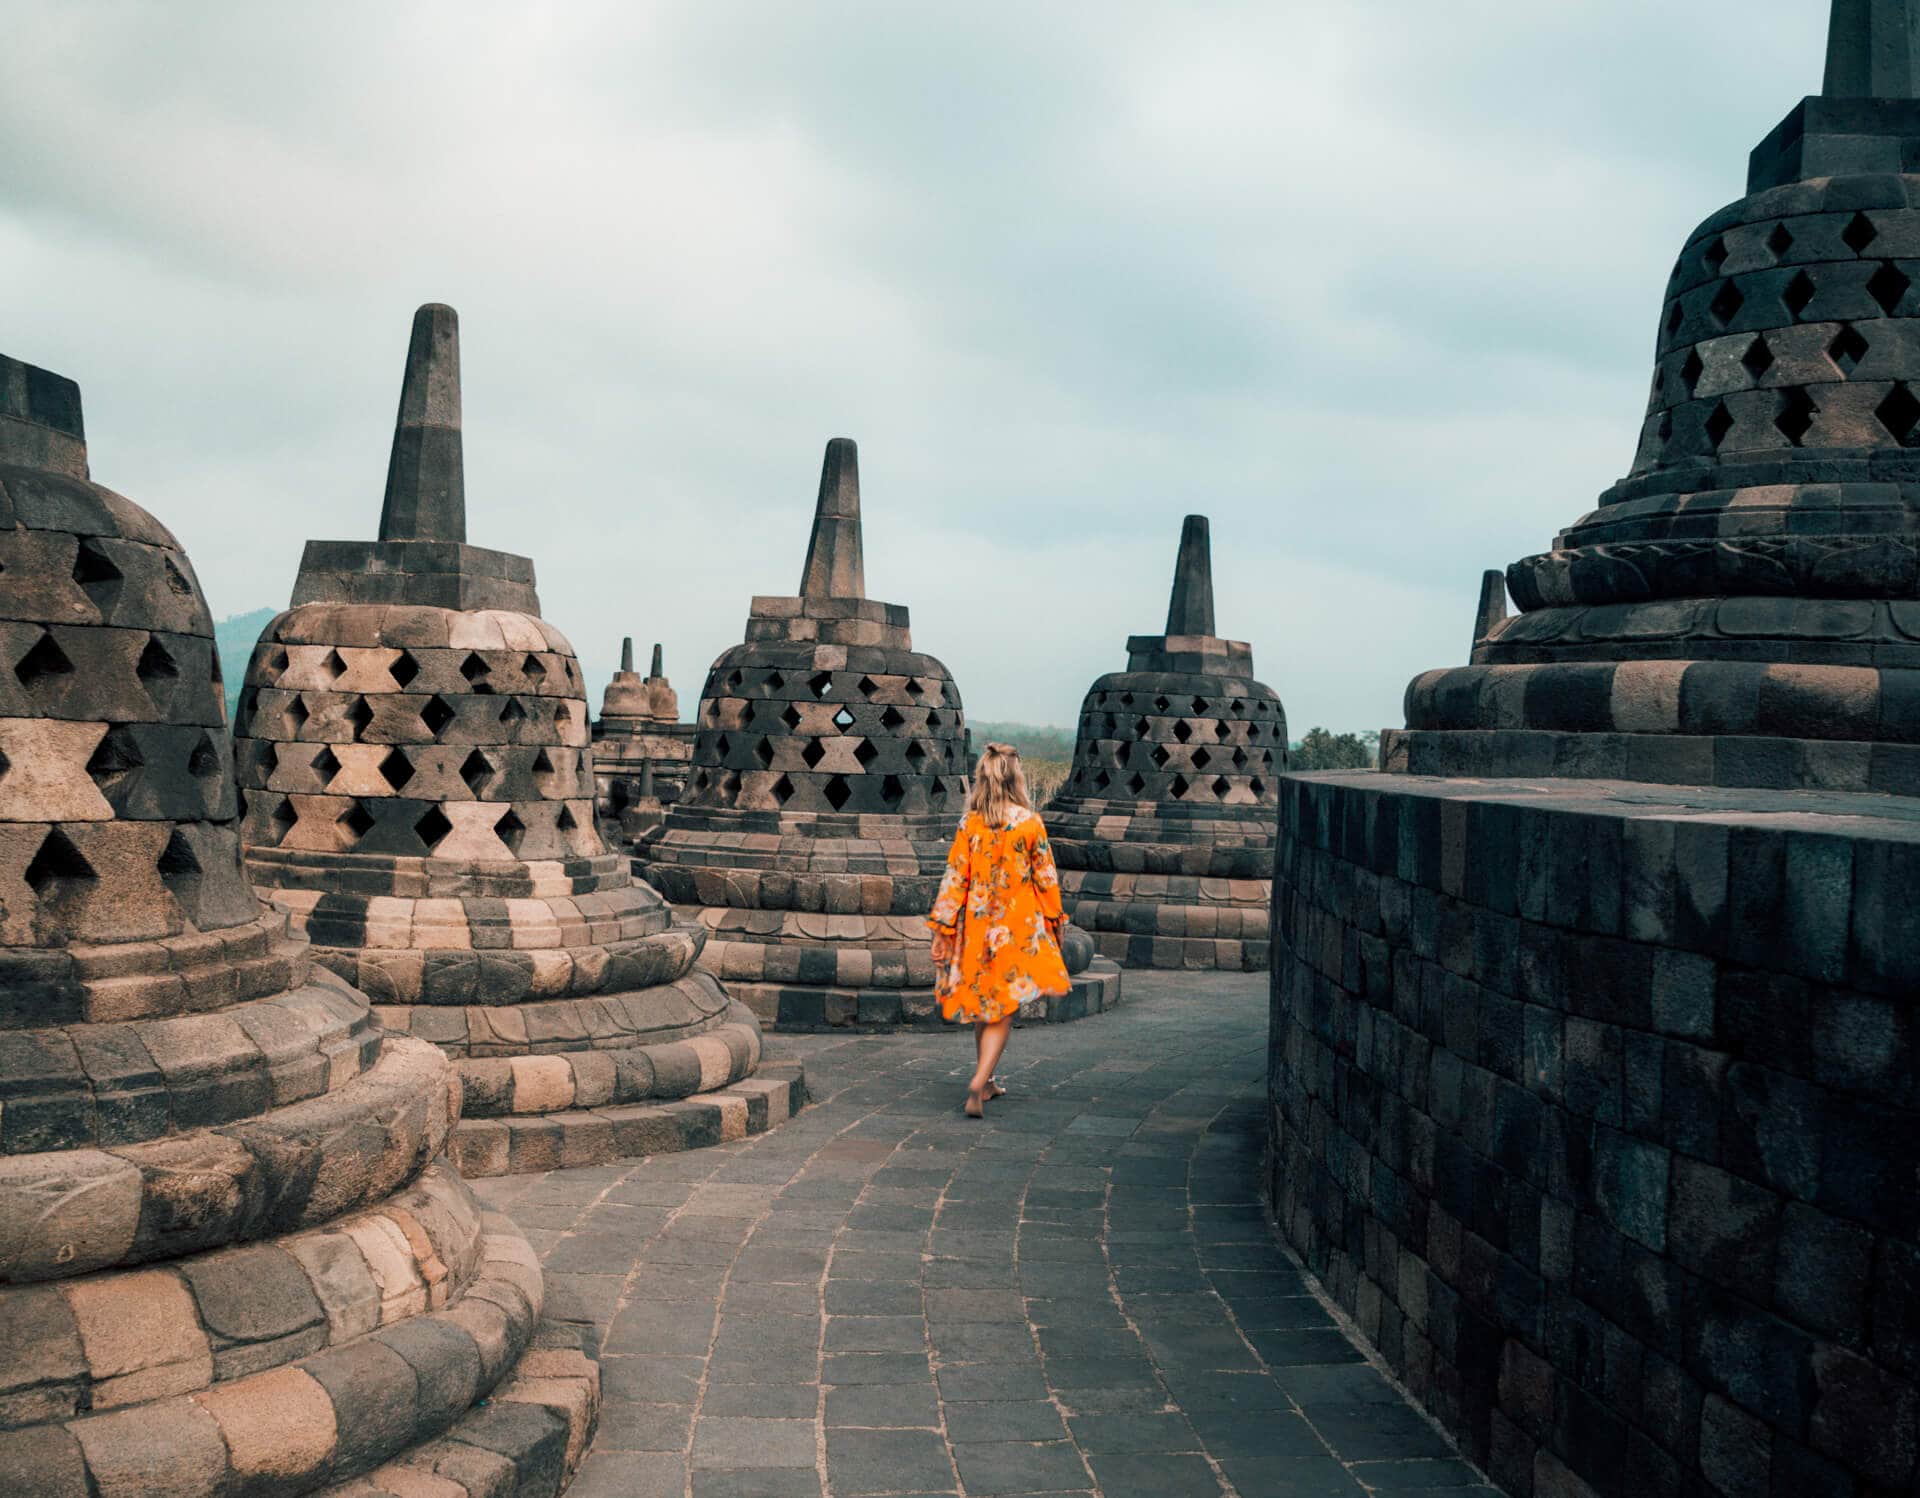 MUST READ: Where To Stay In Yogyakarta